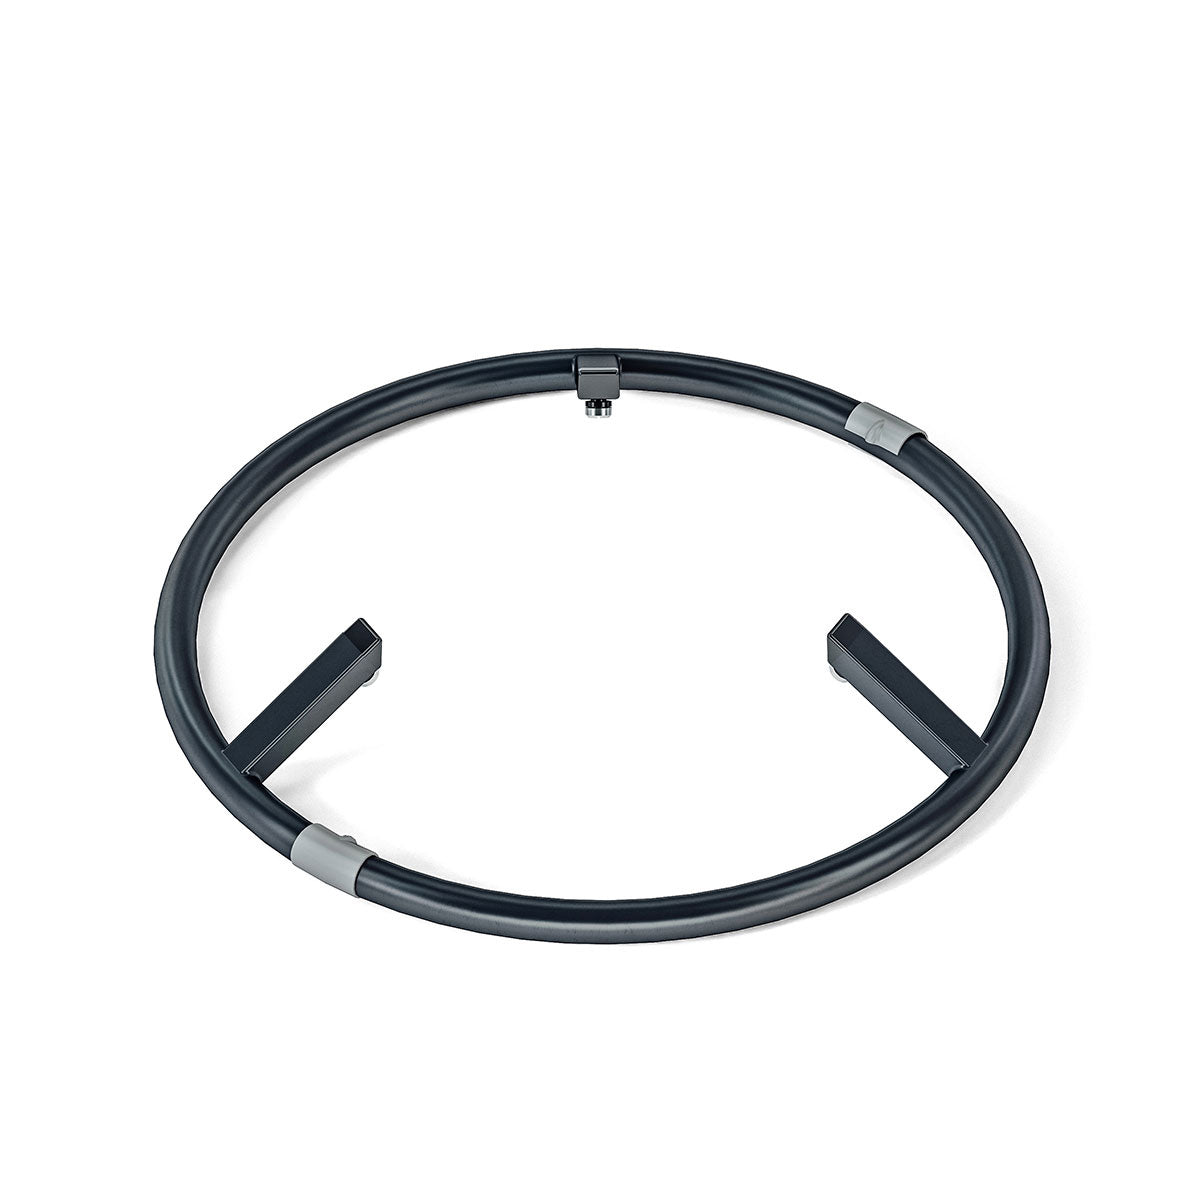 Sachtler(ザハトラー) バリオペデスタル アクセサリ Steering ring, small [3374-17]